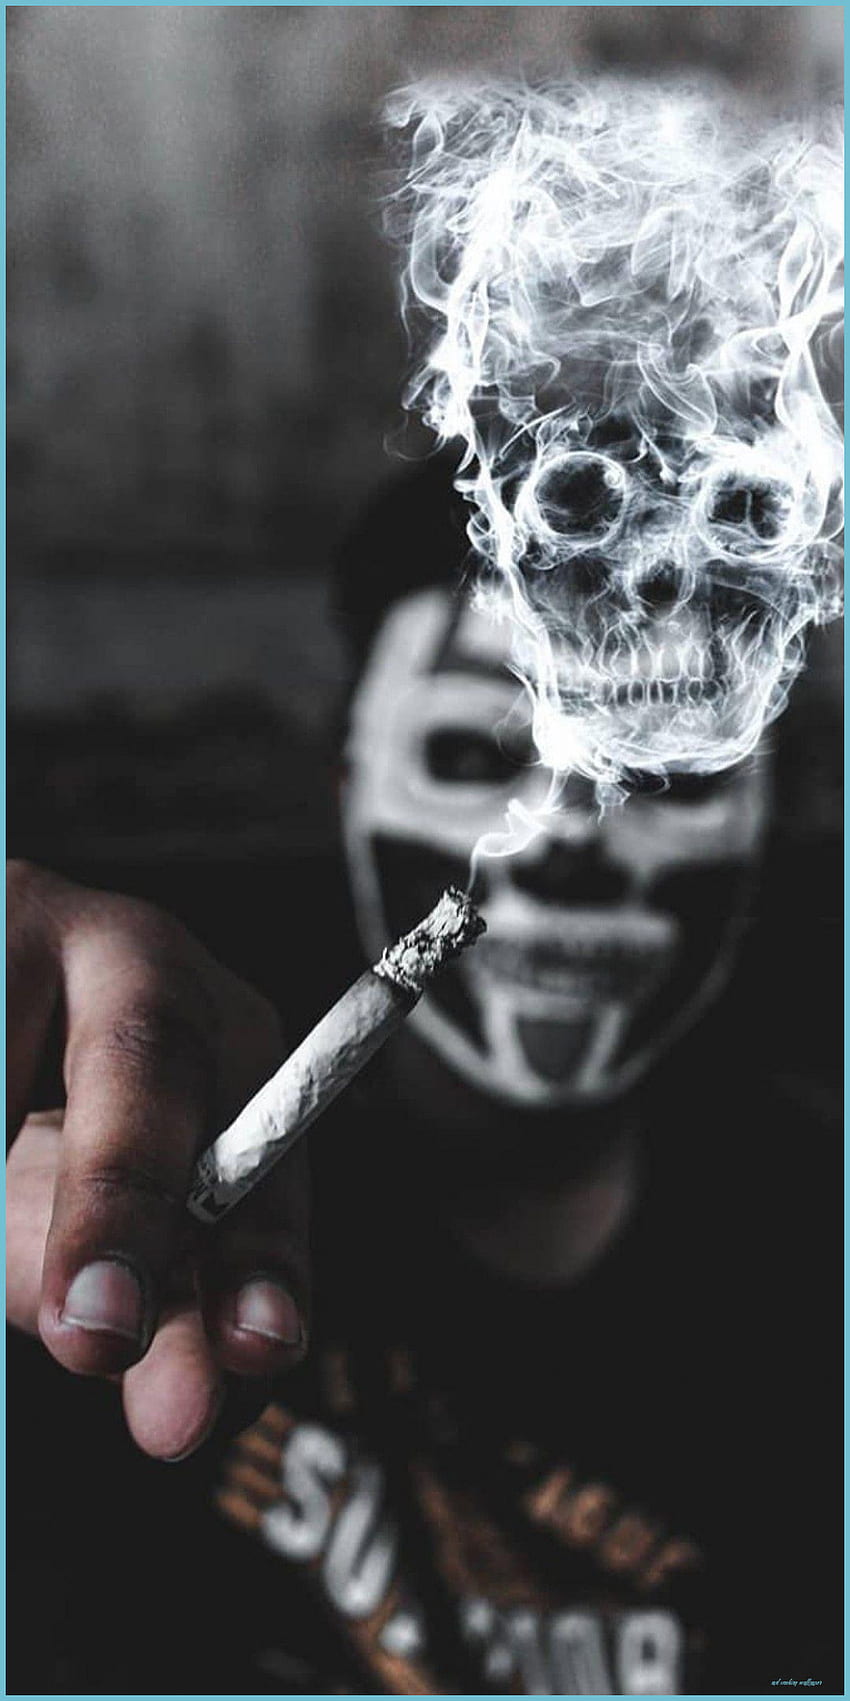 1,000+ Free Cigarette & Smoking Images - Pixabay